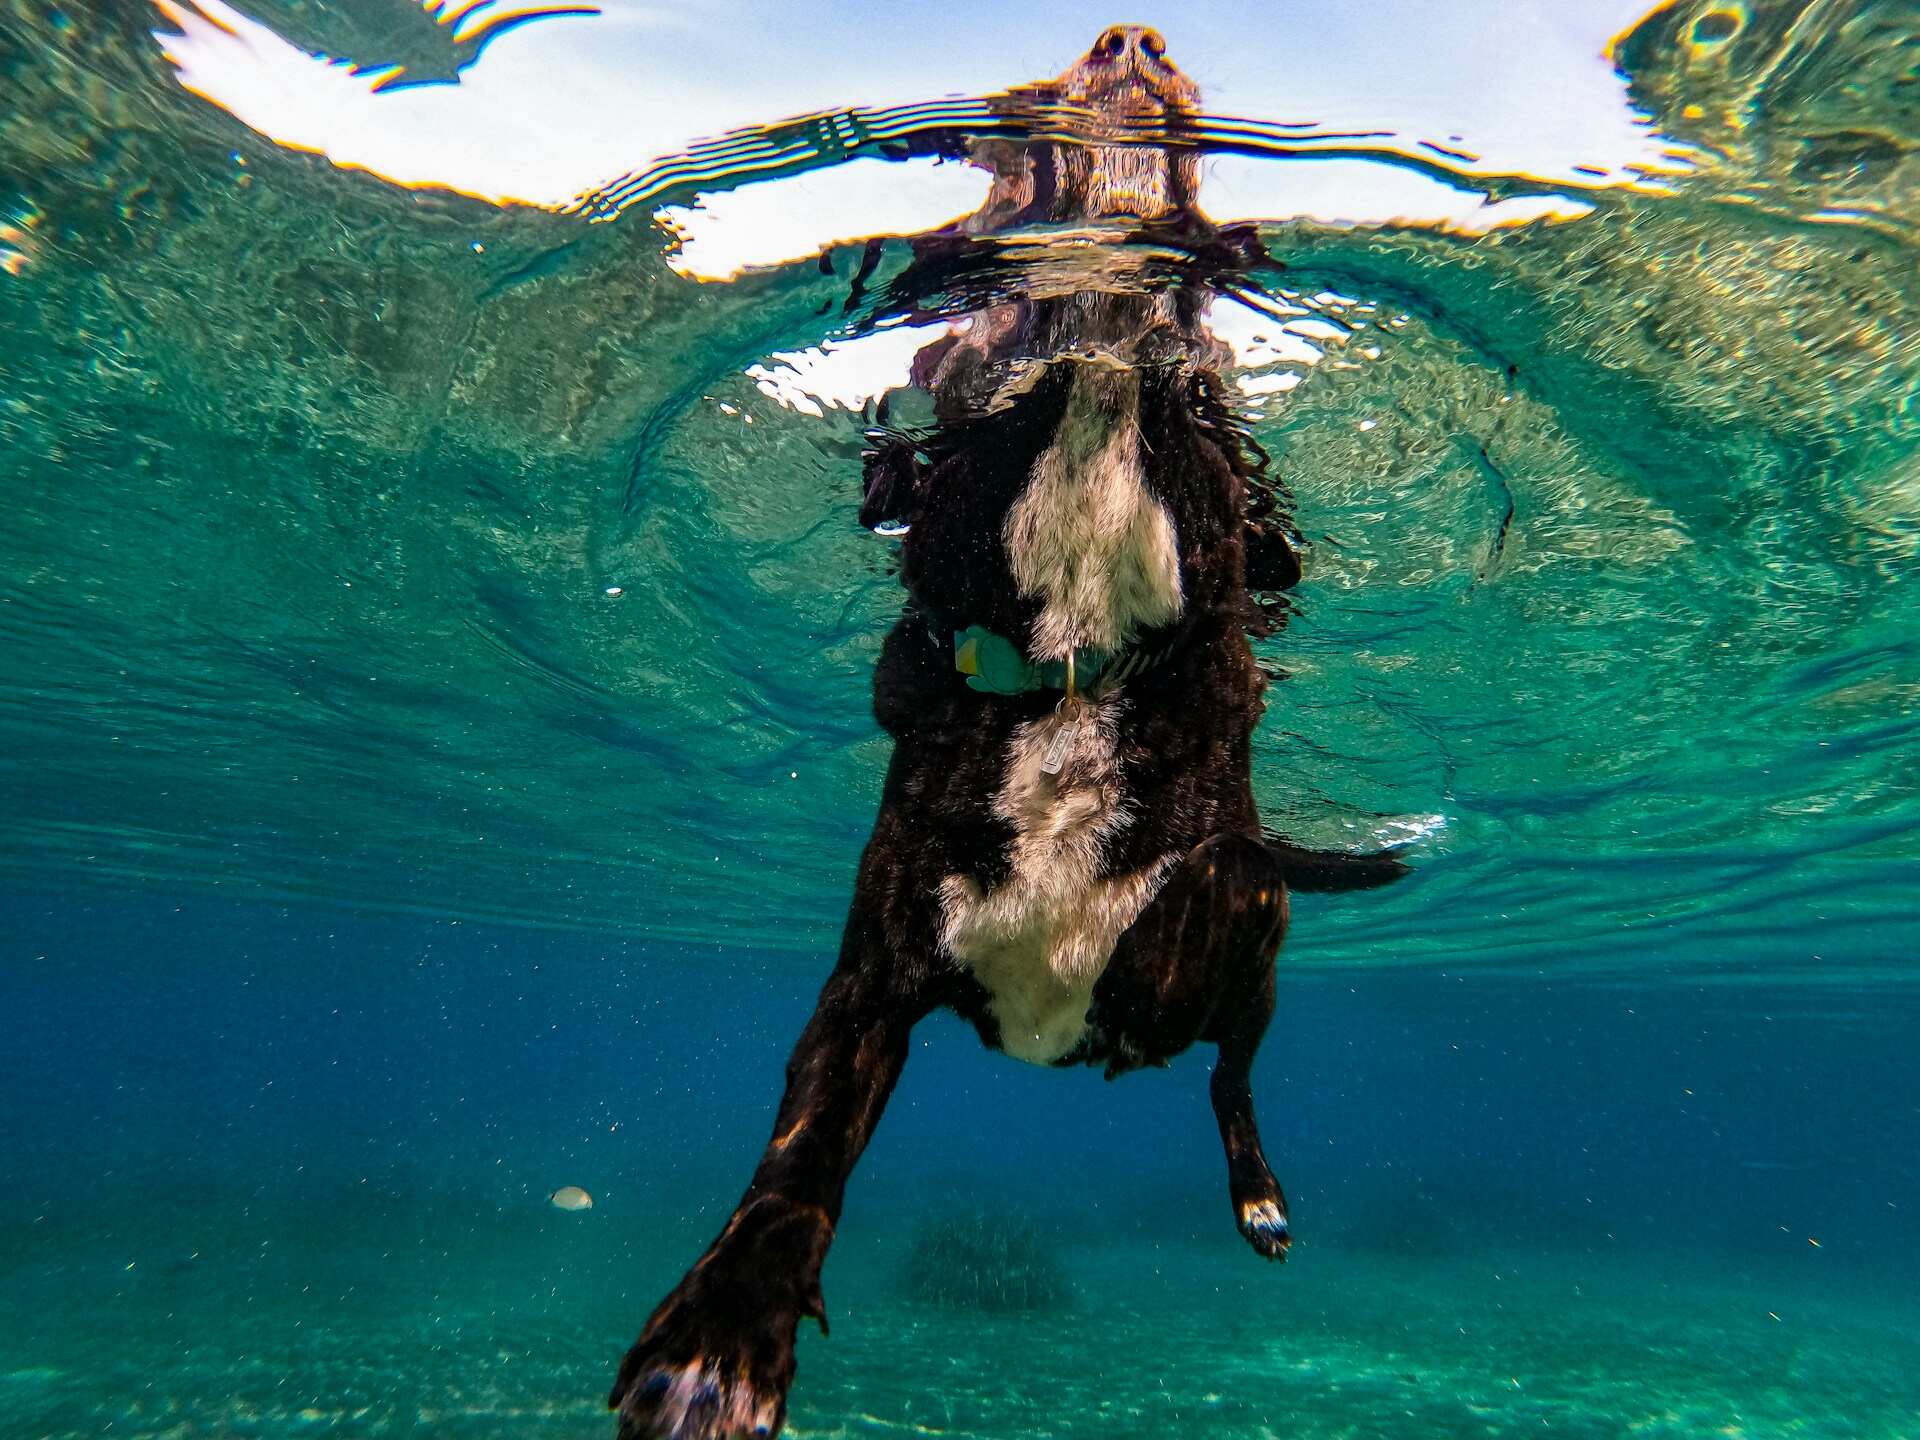 A dog swimming through a lake